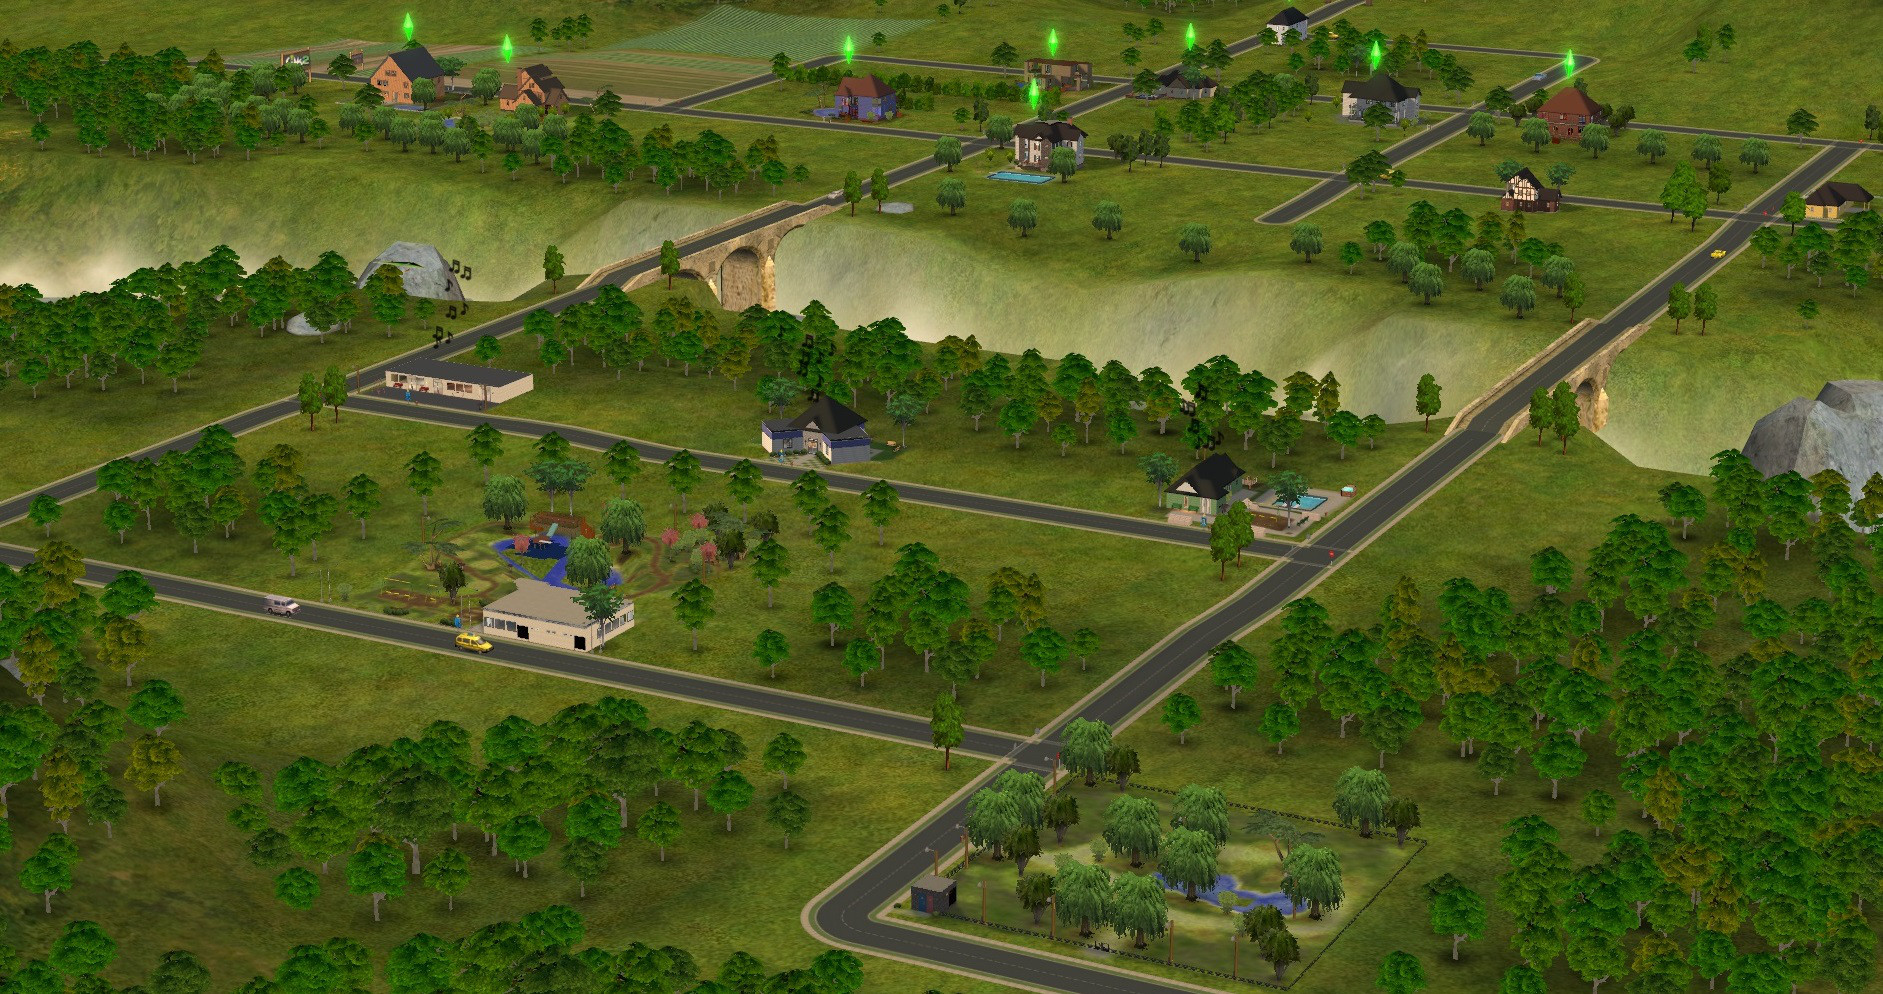 Meadow Creek - An Inhabited Base Game/ No CC Neighborhood *Updated